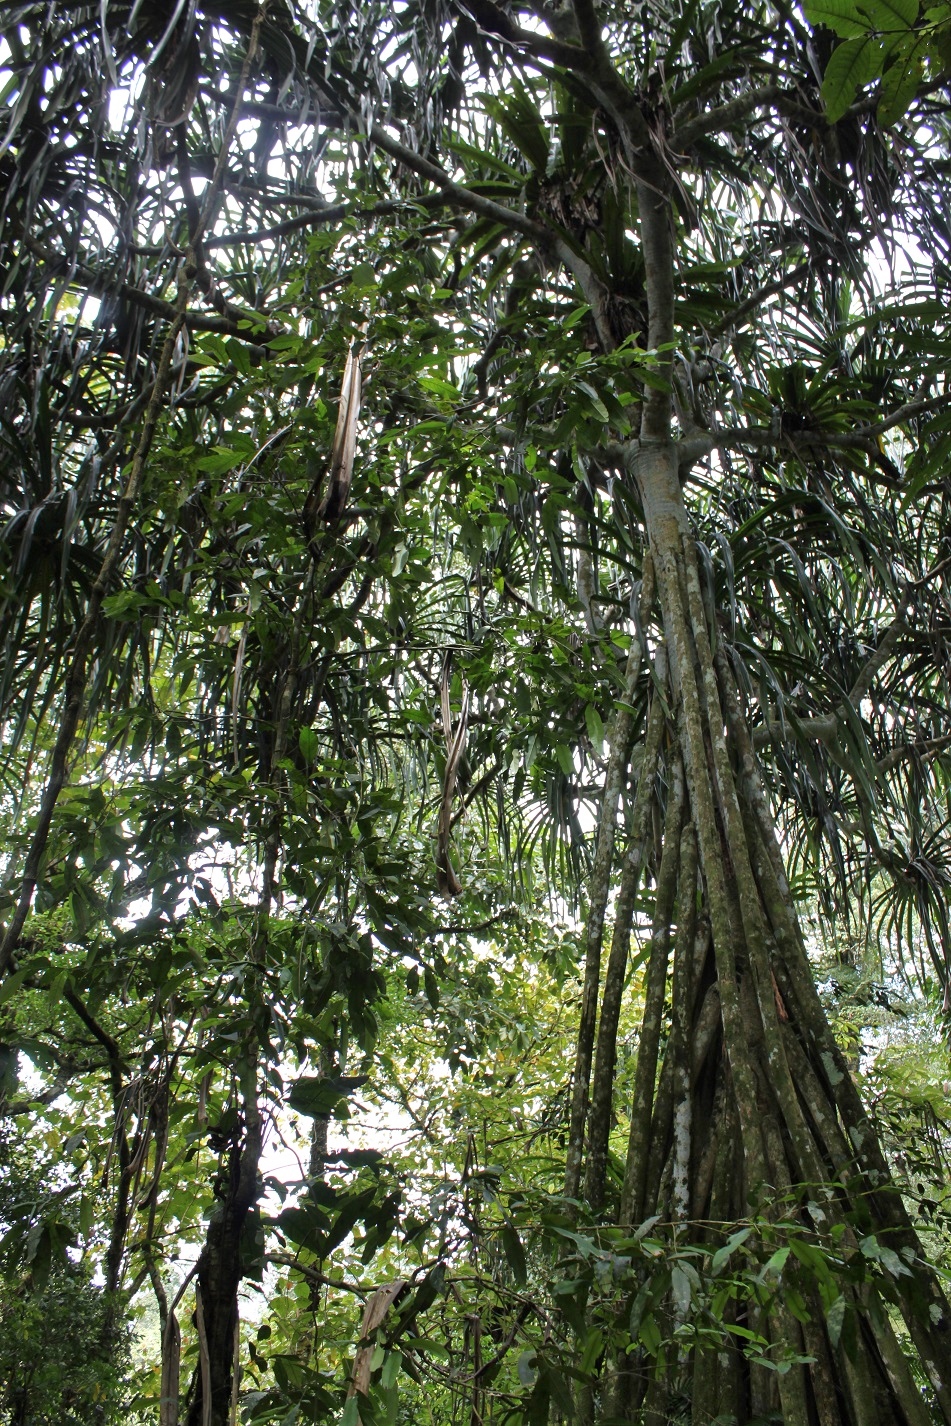 Giant Pandanus Trees Soar High above the Forest Floor